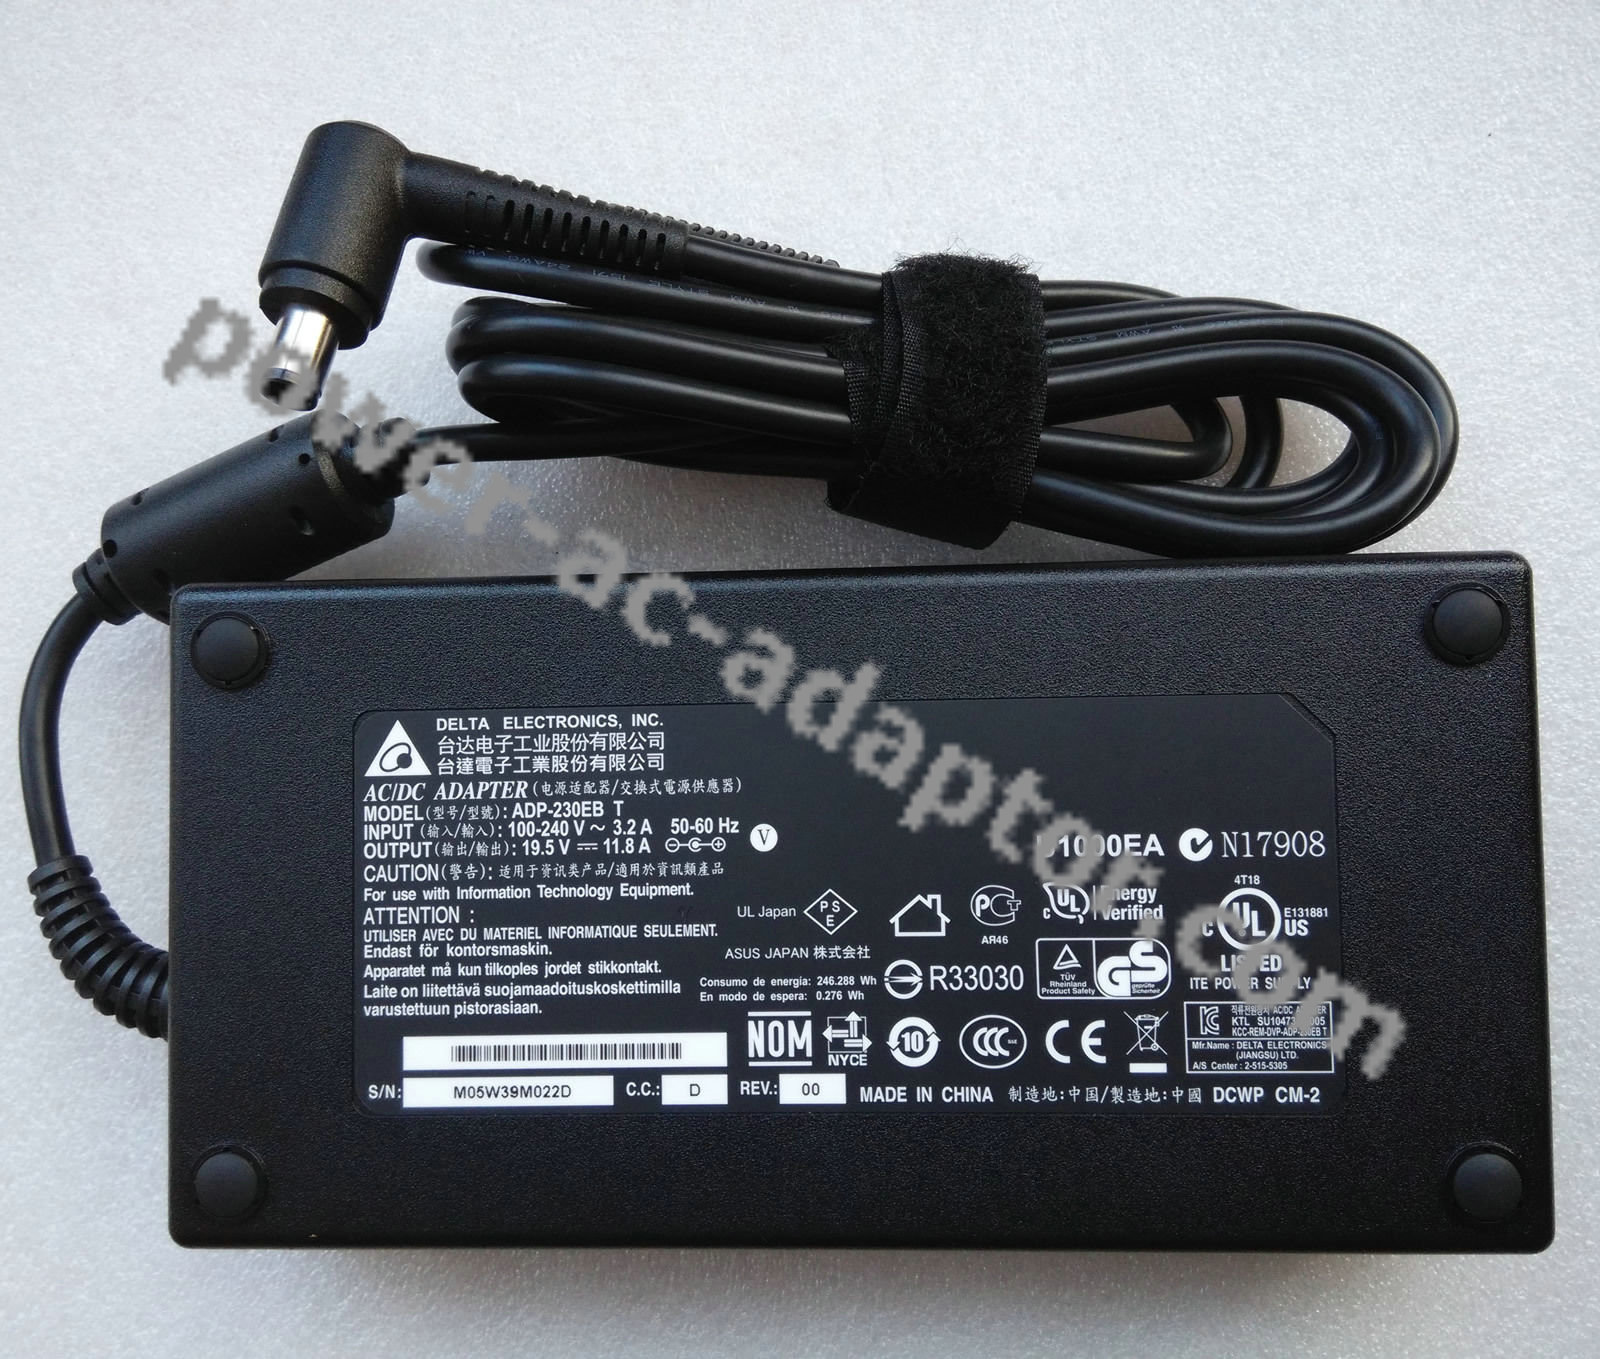 Original 19.5V 11.8A 230W ASUS ADP-230EB T AC Power Adapter